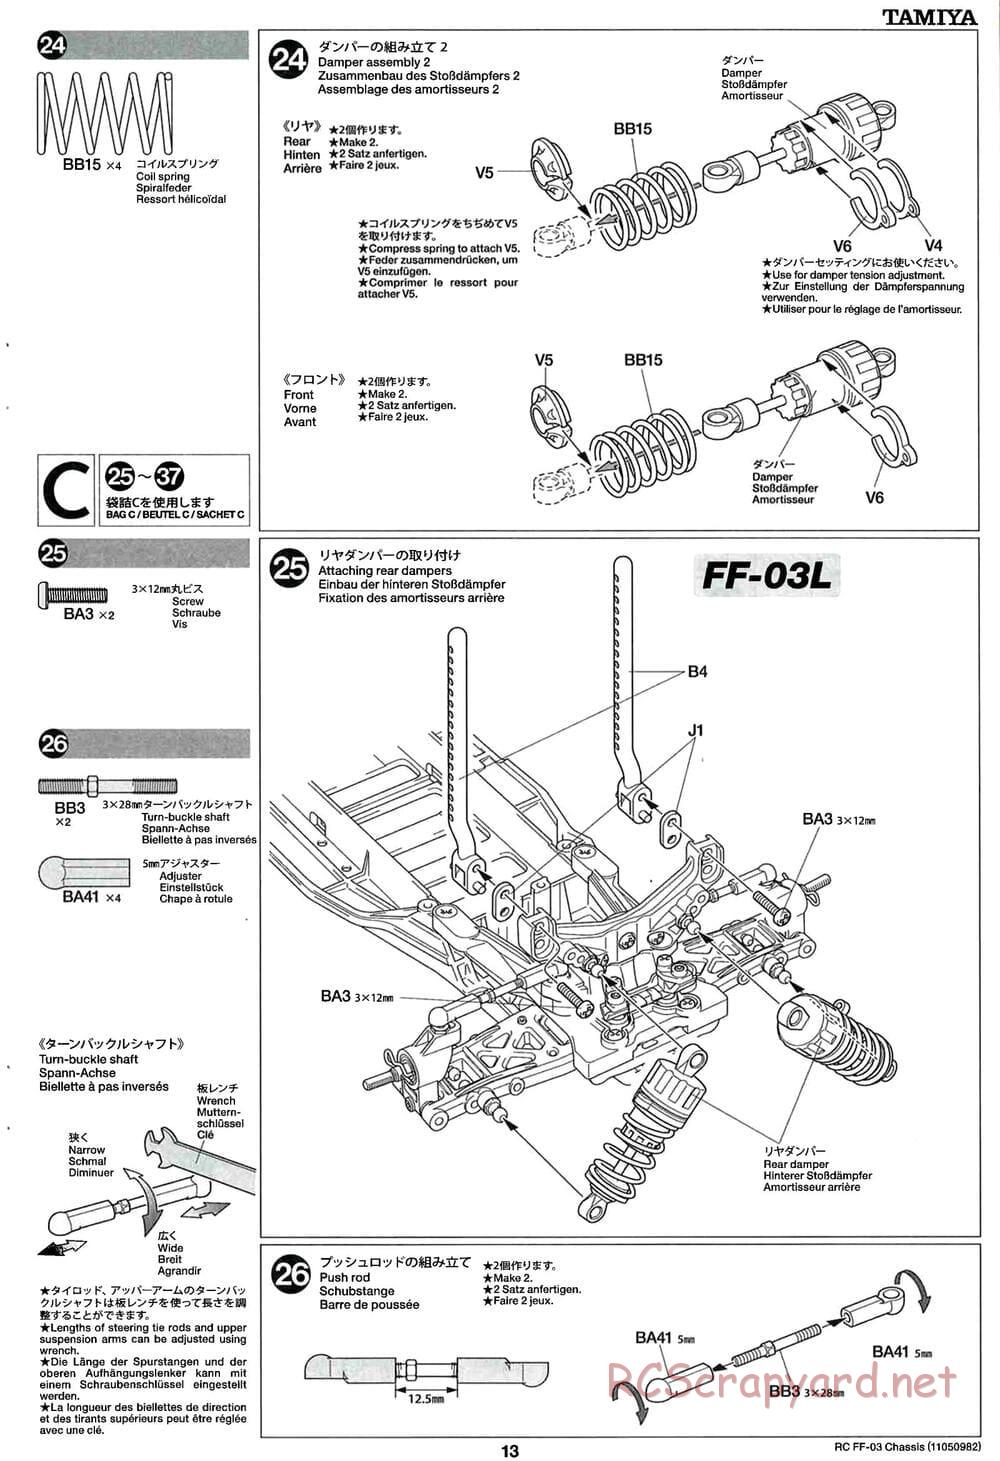 Tamiya - FF-03 Chassis - Manual - Page 13